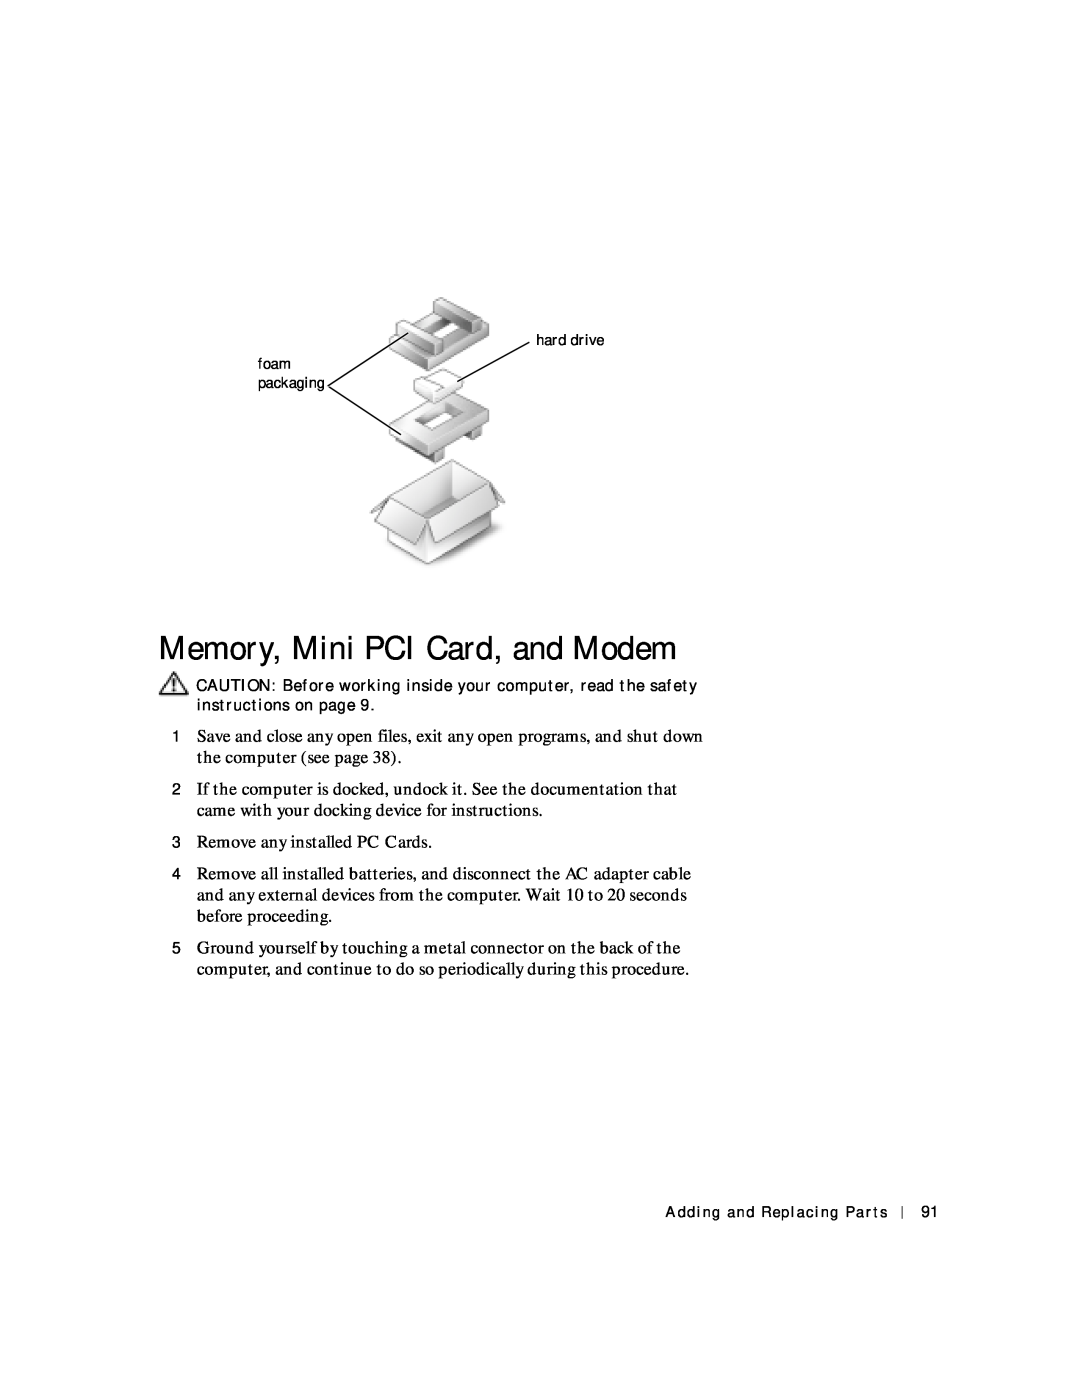 Dell 4150 owner manual Memory, Mini PCI Card, and Modem, foam packaging 